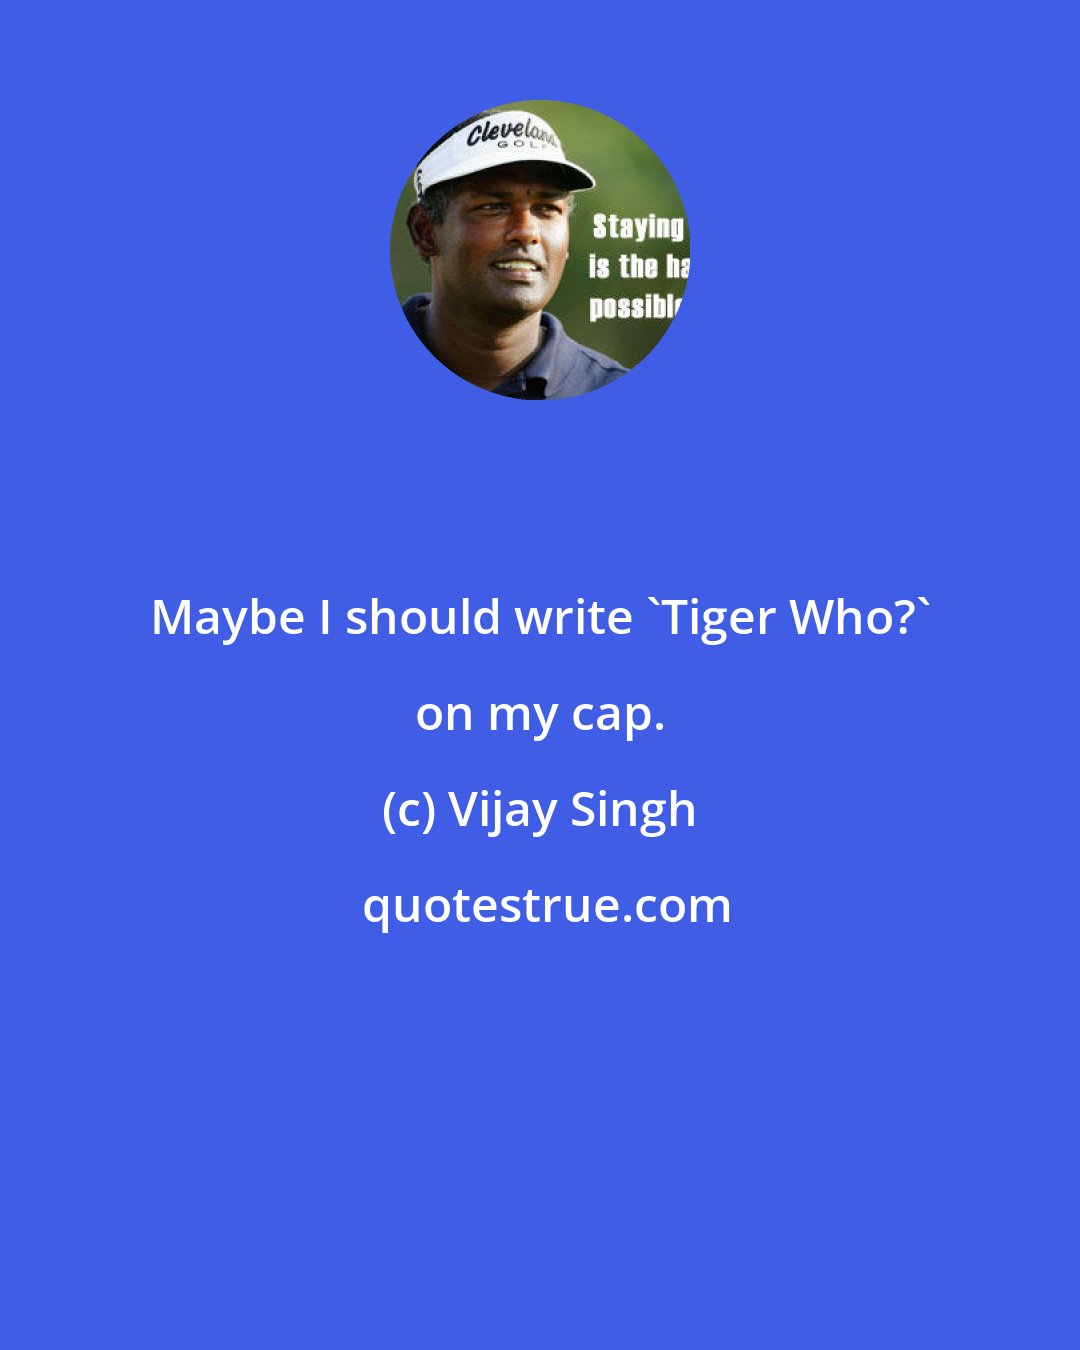 Vijay Singh: Maybe I should write 'Tiger Who?' on my cap.